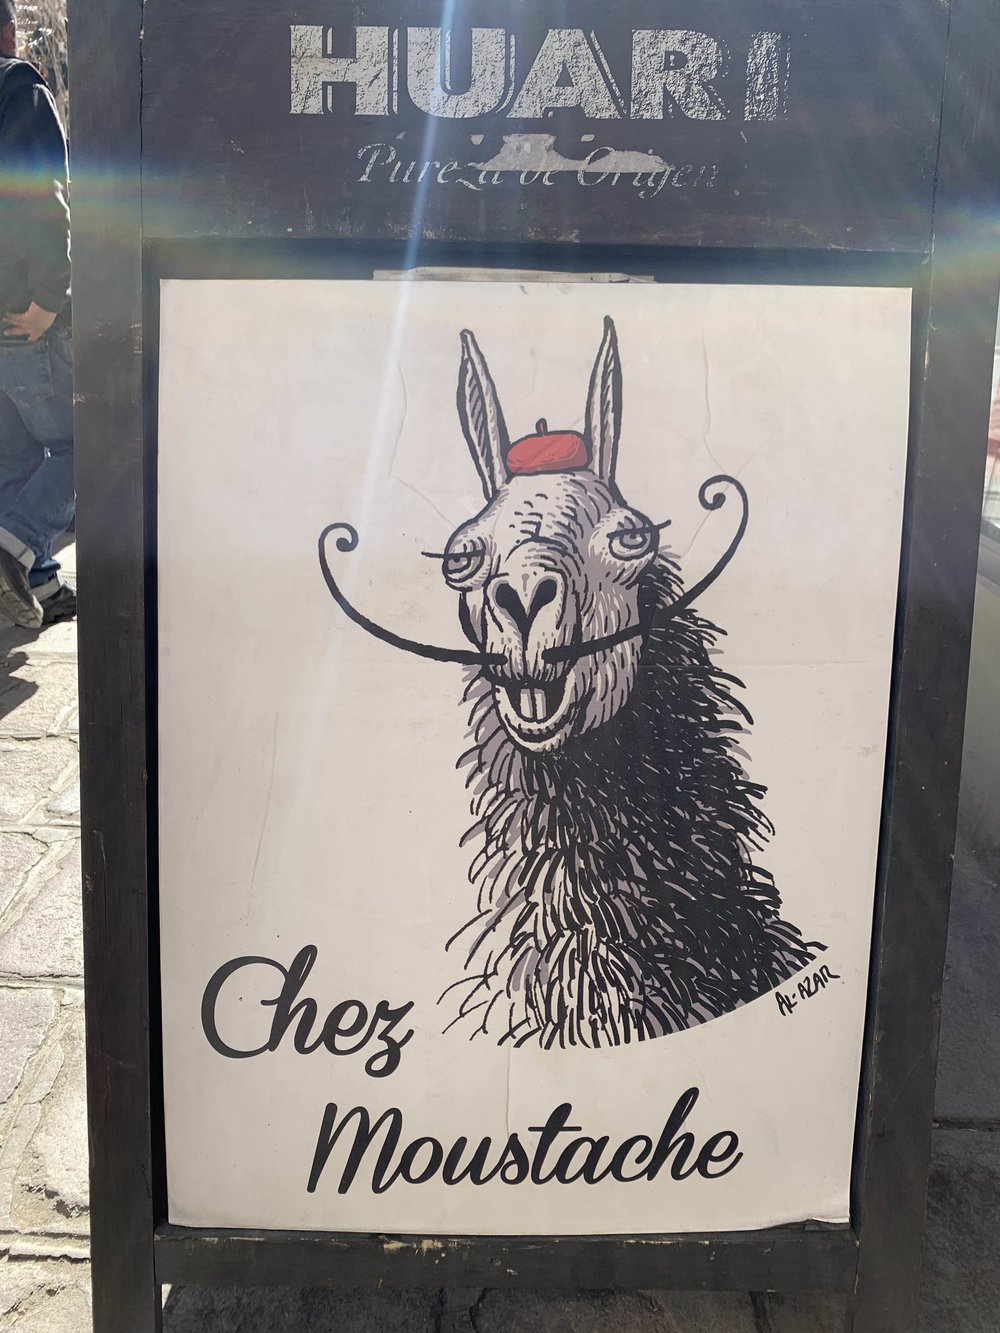  Perhaps the best restaurant mascot I’ve seen to date 